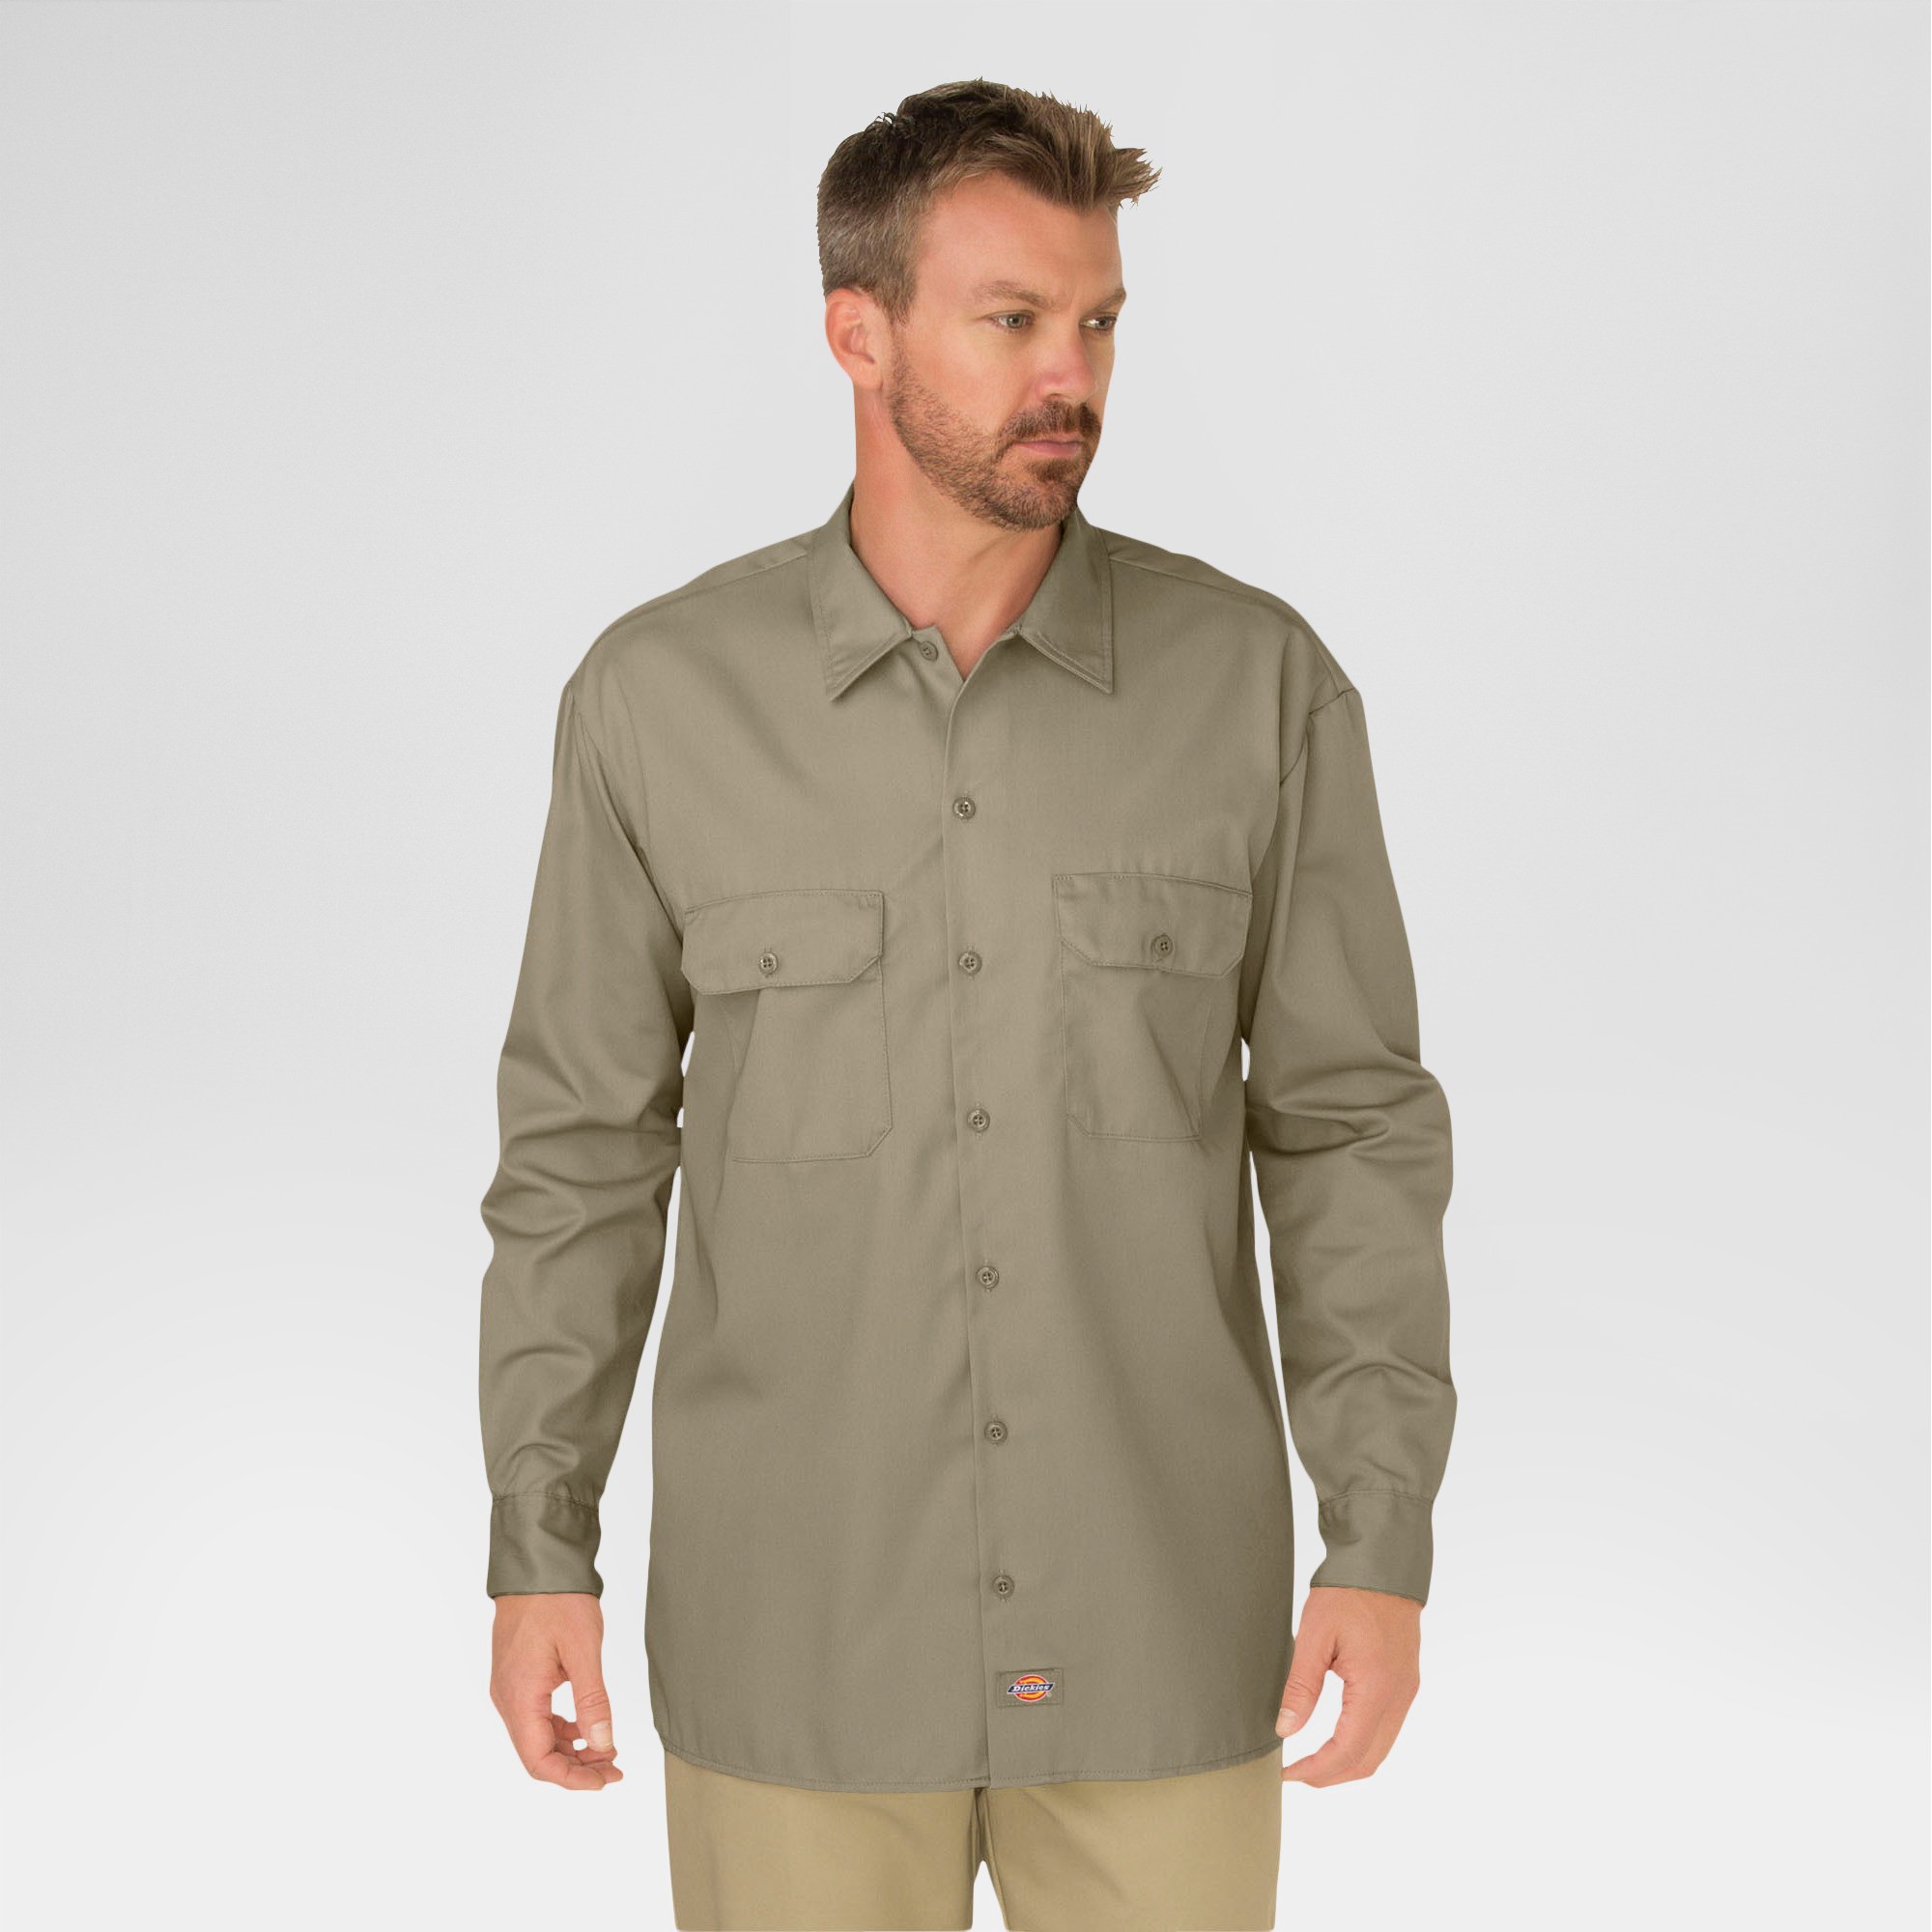 Dickies Men's Original Fit Twill Long Sleeve Shirt-Khaki M, Size: Medium, Green